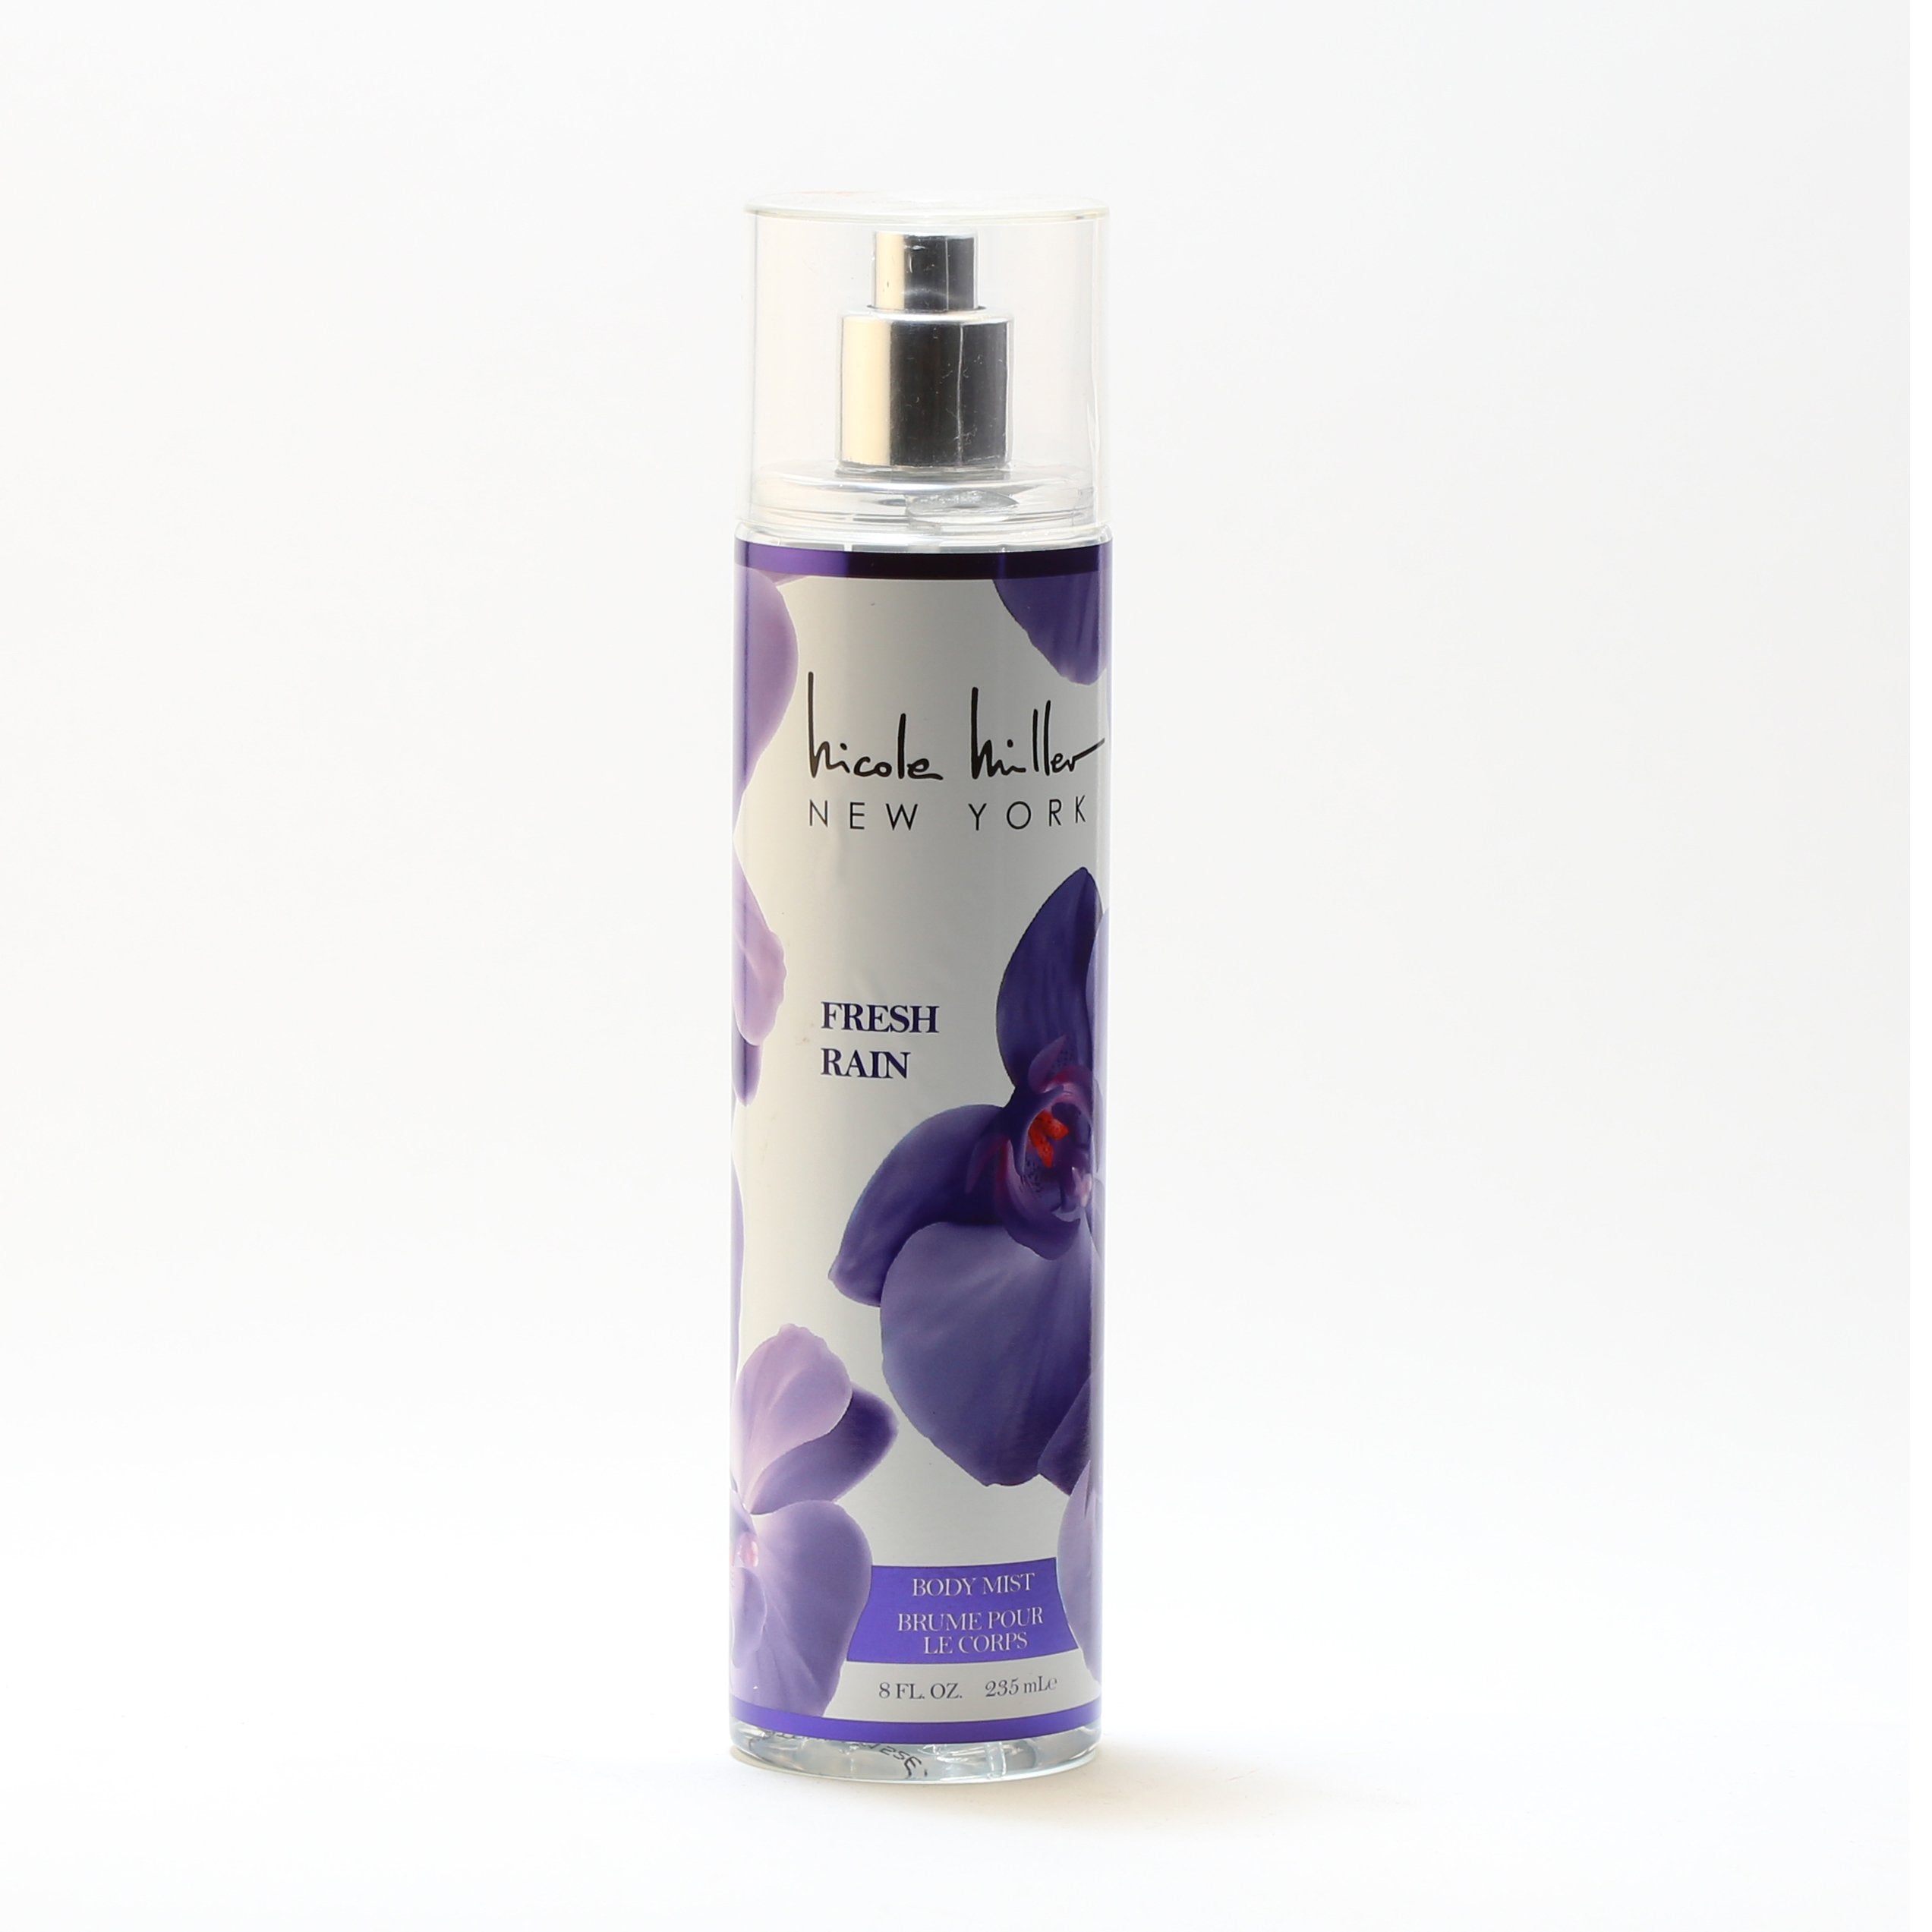 Perfume - NICOLE MILLER FRESH RAIN FOR WOMEN - BODY SPRAY, 8.0 OZ